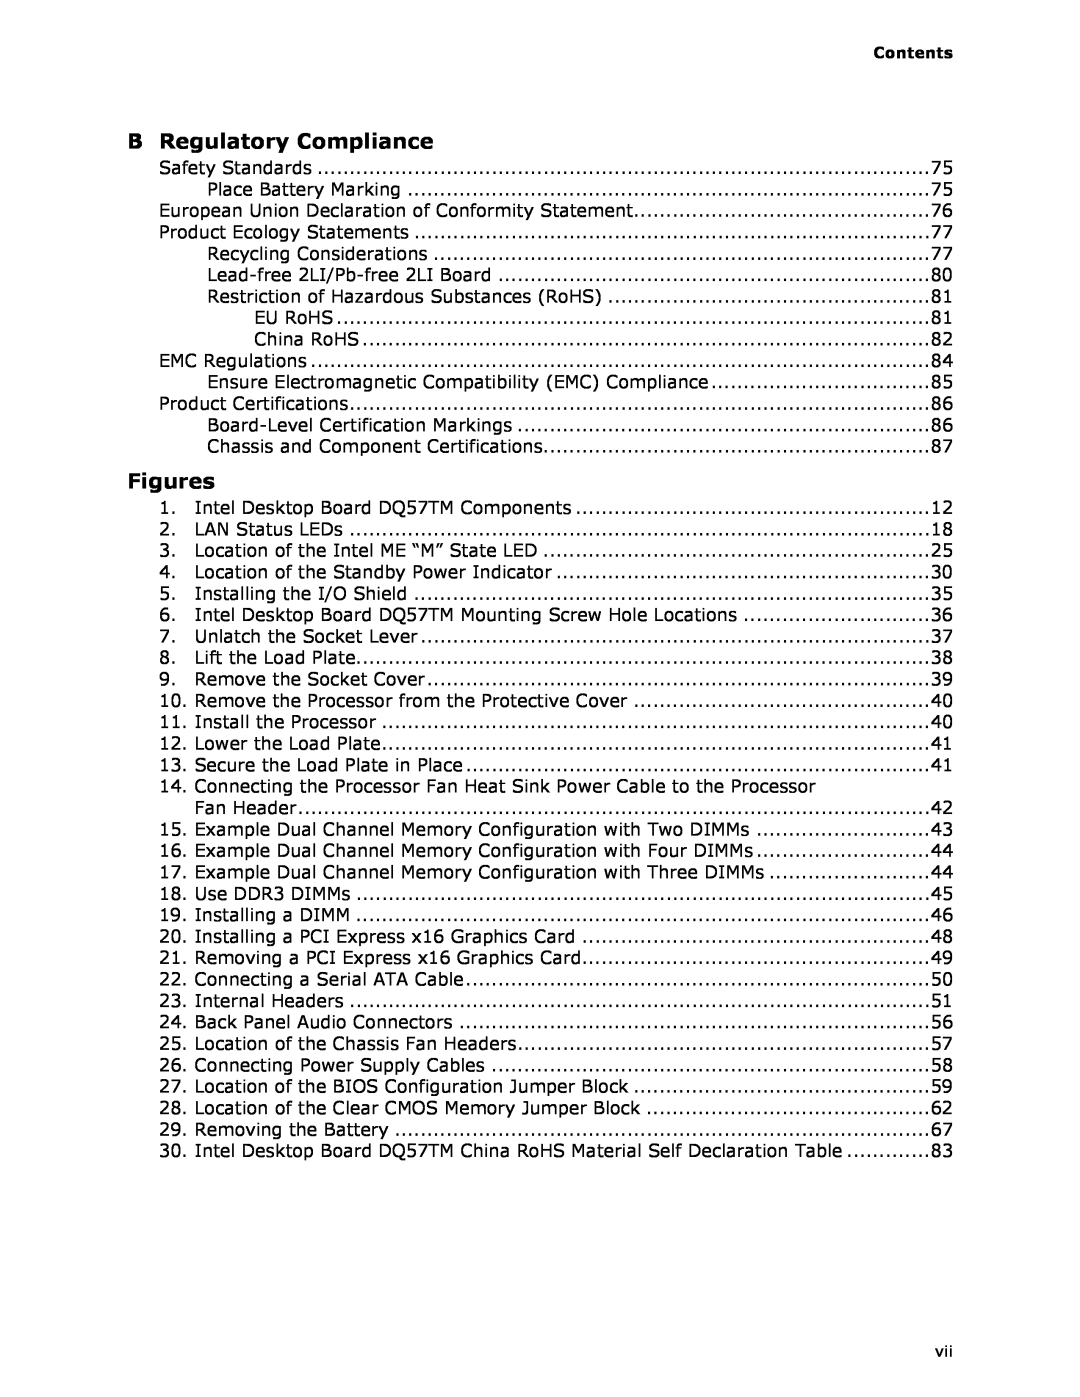 Intel DQ57TM manual B Regulatory Compliance, Figures 